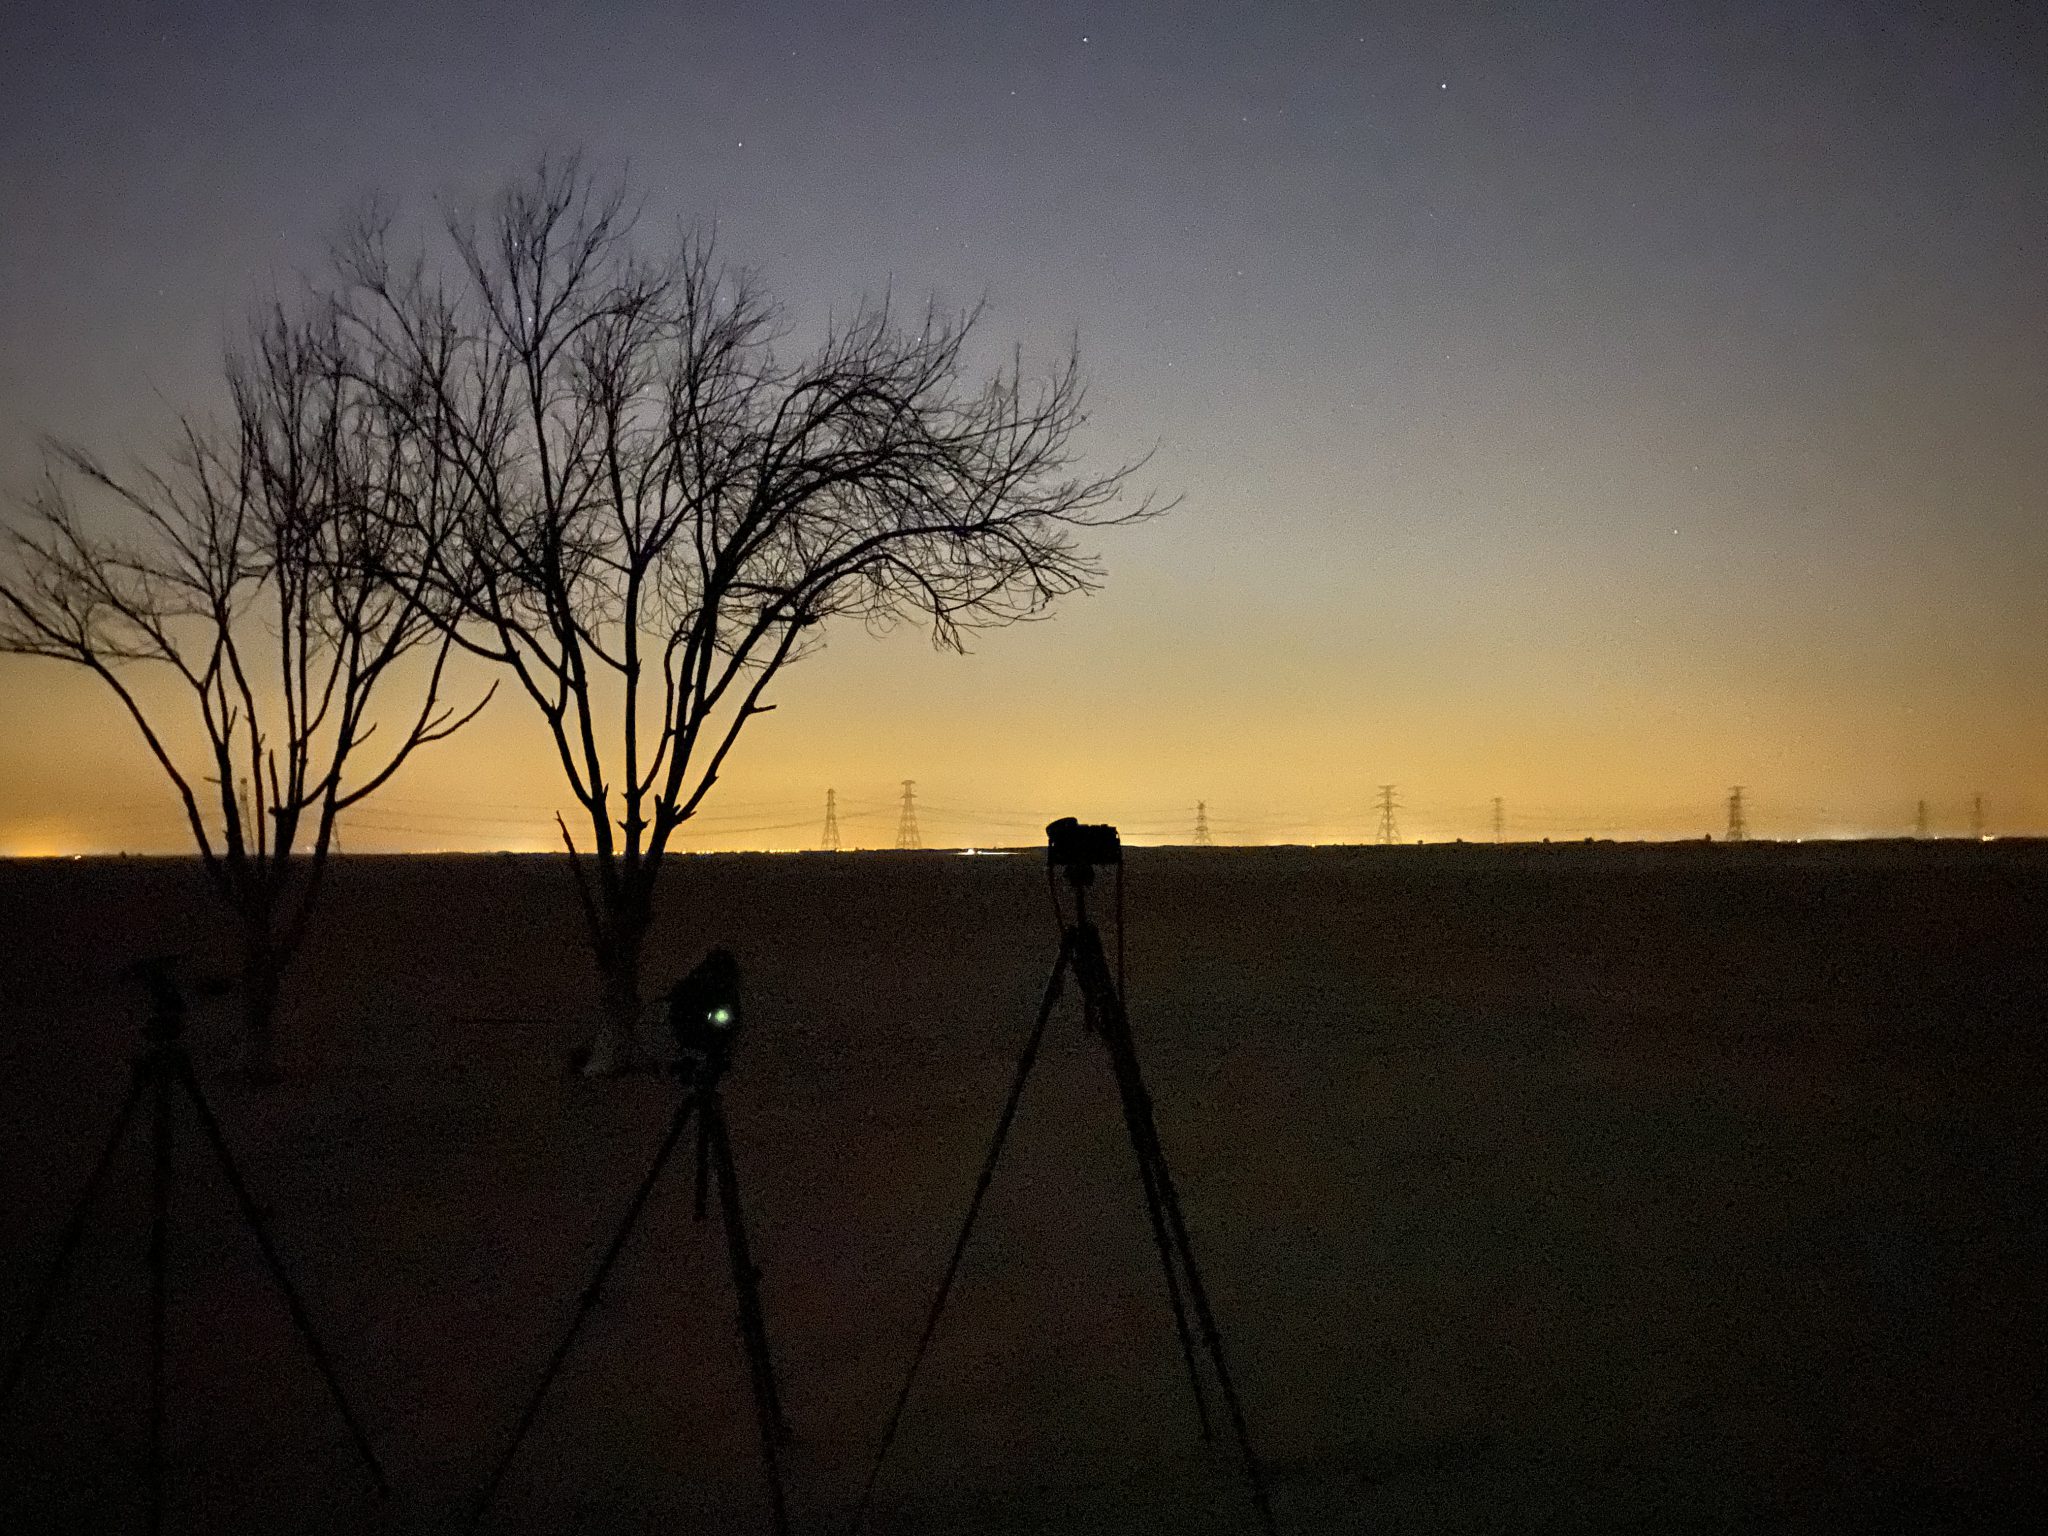 Photography equipment setup to capture star trails